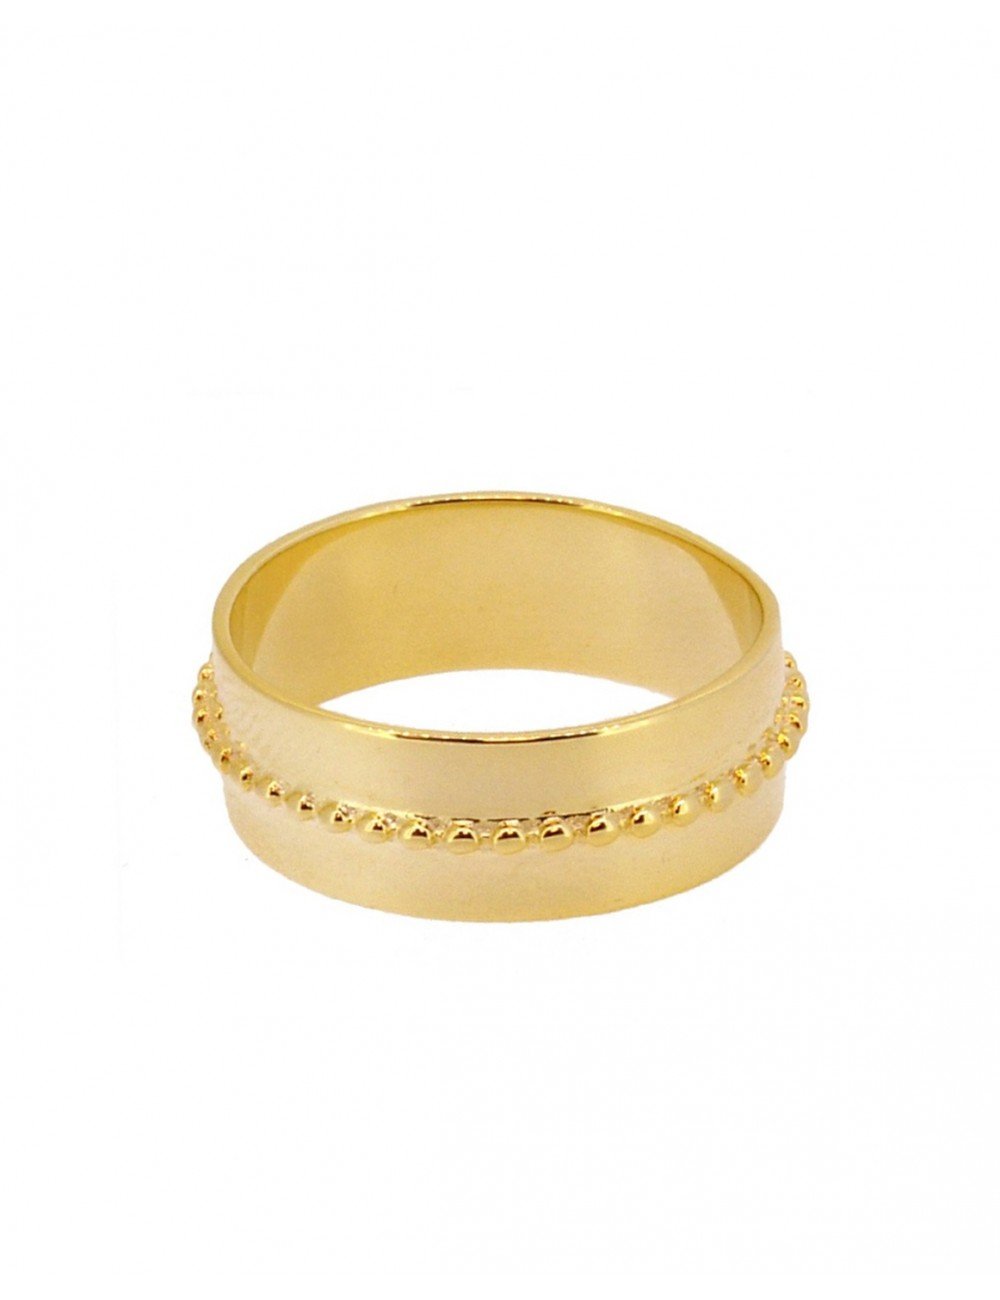 Velvet gold - Gold rings - Trium Jewelry